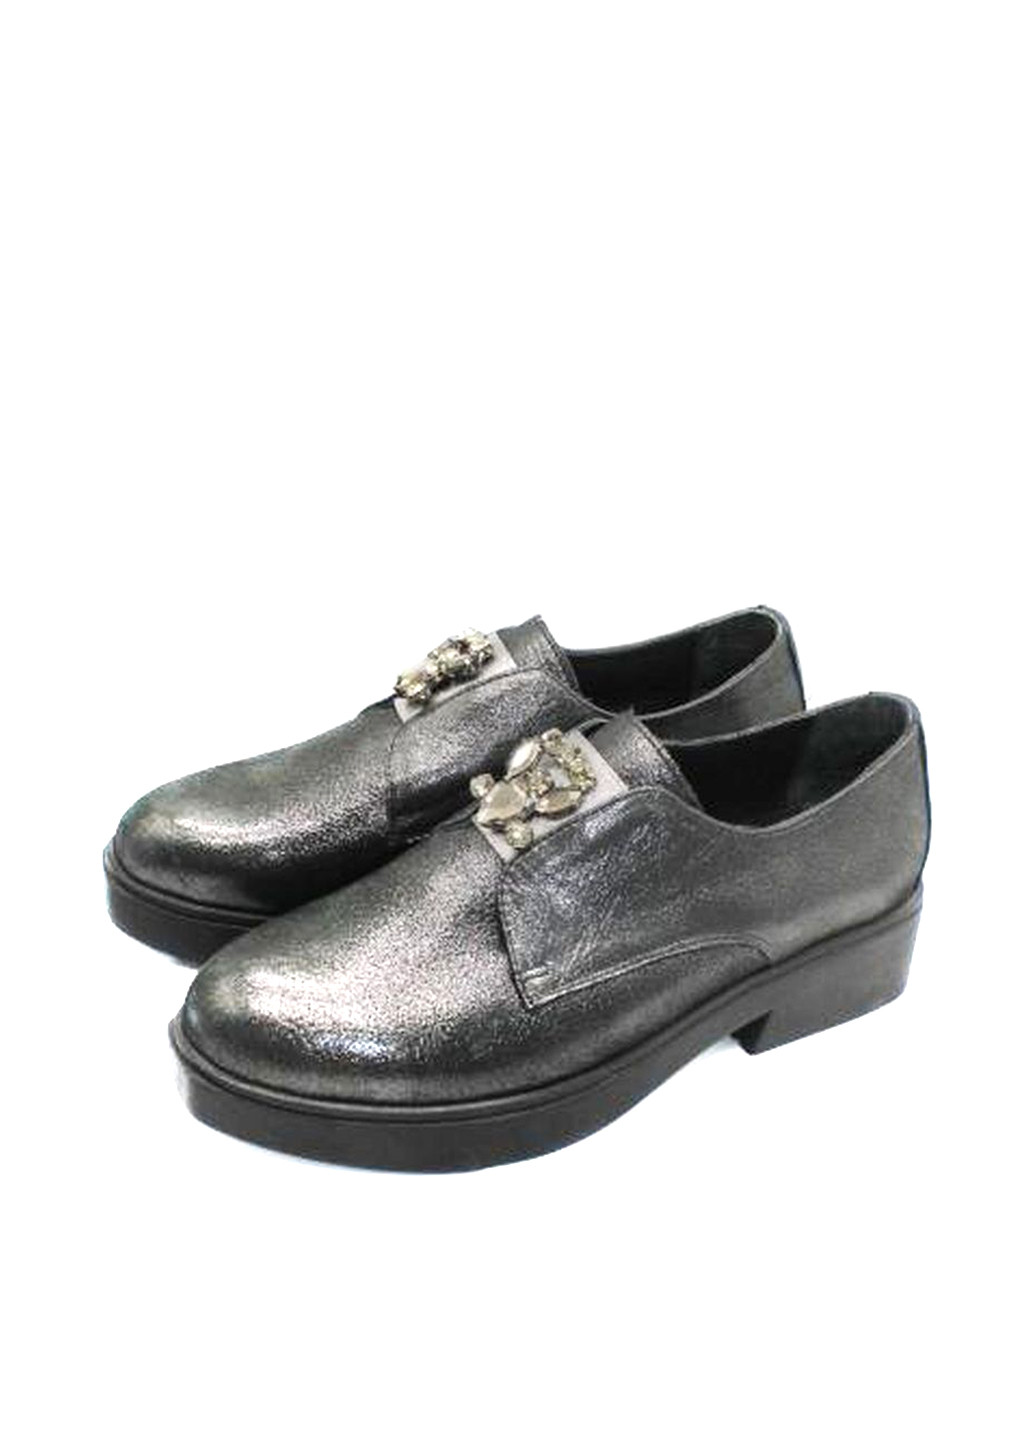 Туфли Rifellini на низком каблуке с металлическими вставками